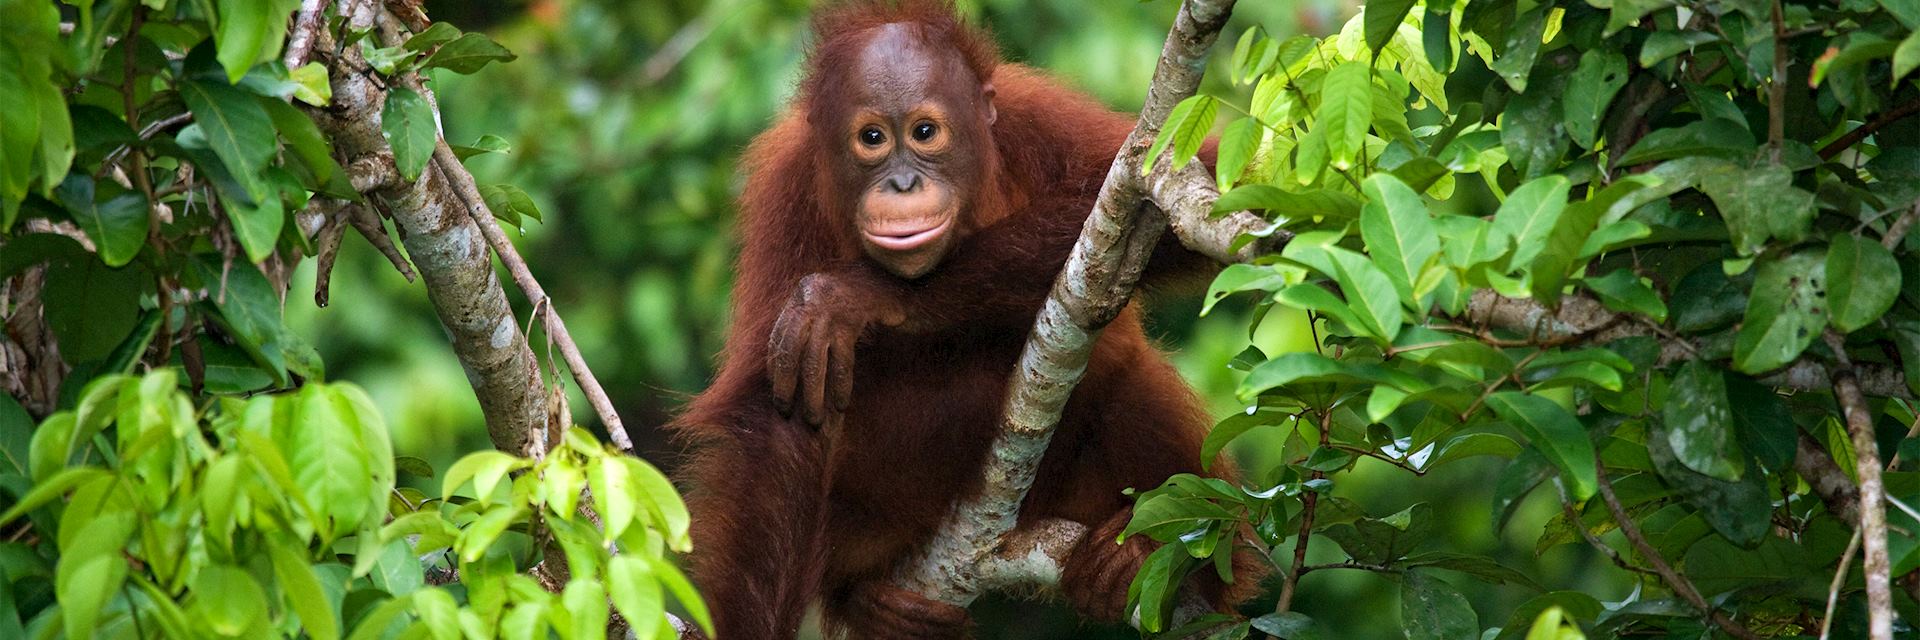 https://media.audleytravel.com/-/media/images/home/southeast-asia/borneo/itineraries/istock-678001424_baby_orangutan_1000x3000.jpg?q=79&w=1920&h=640